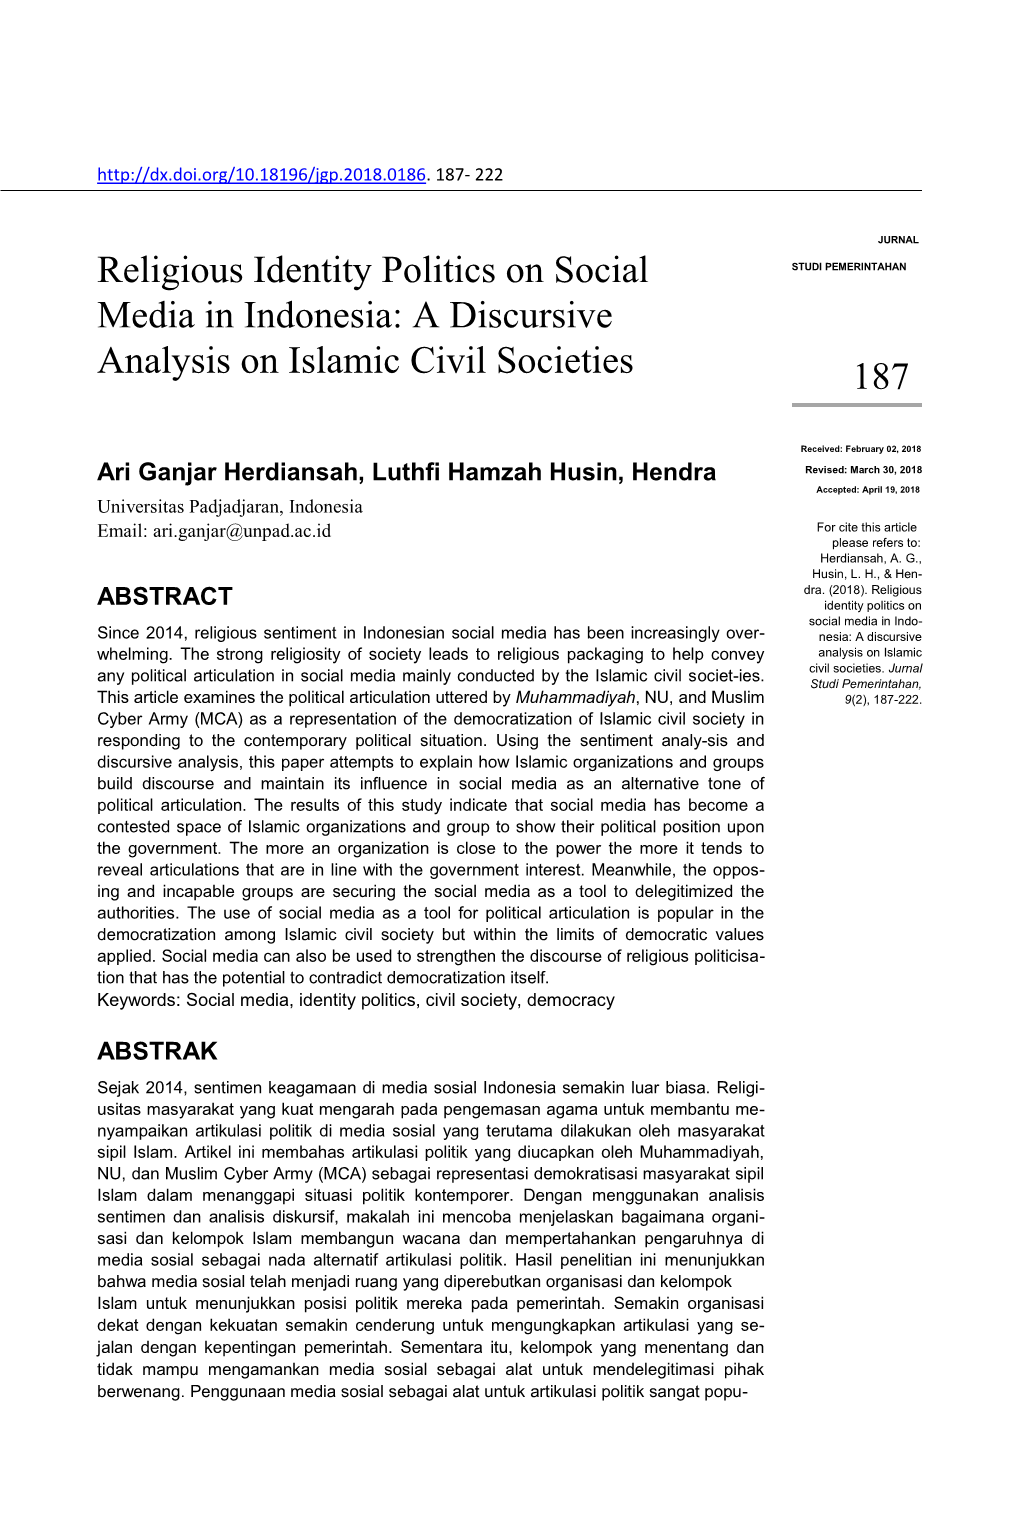 Religious Identity Politics on Social Media in Indonesia